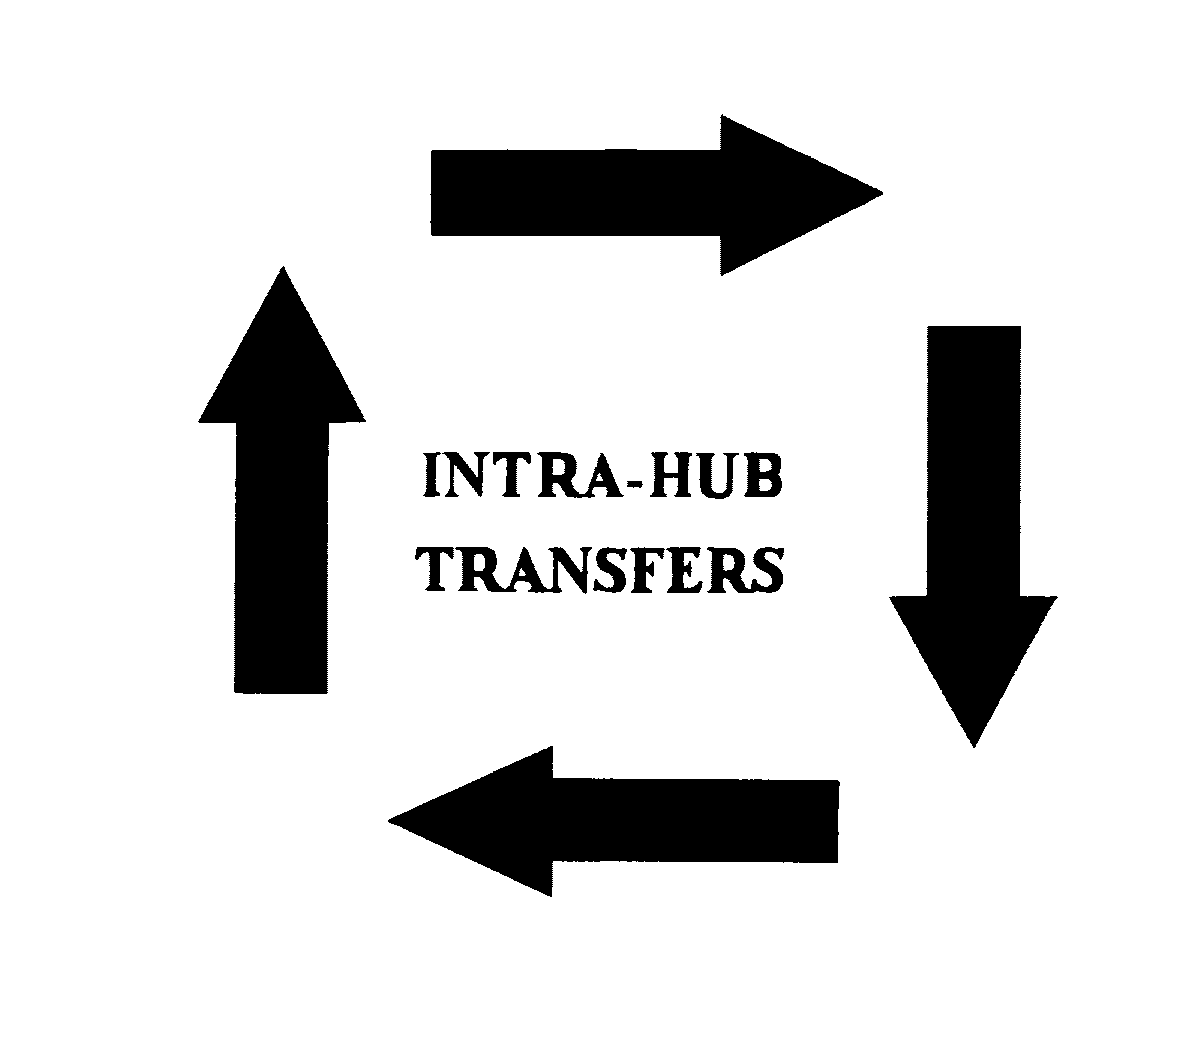  INTRA-HUB TRANSFERS